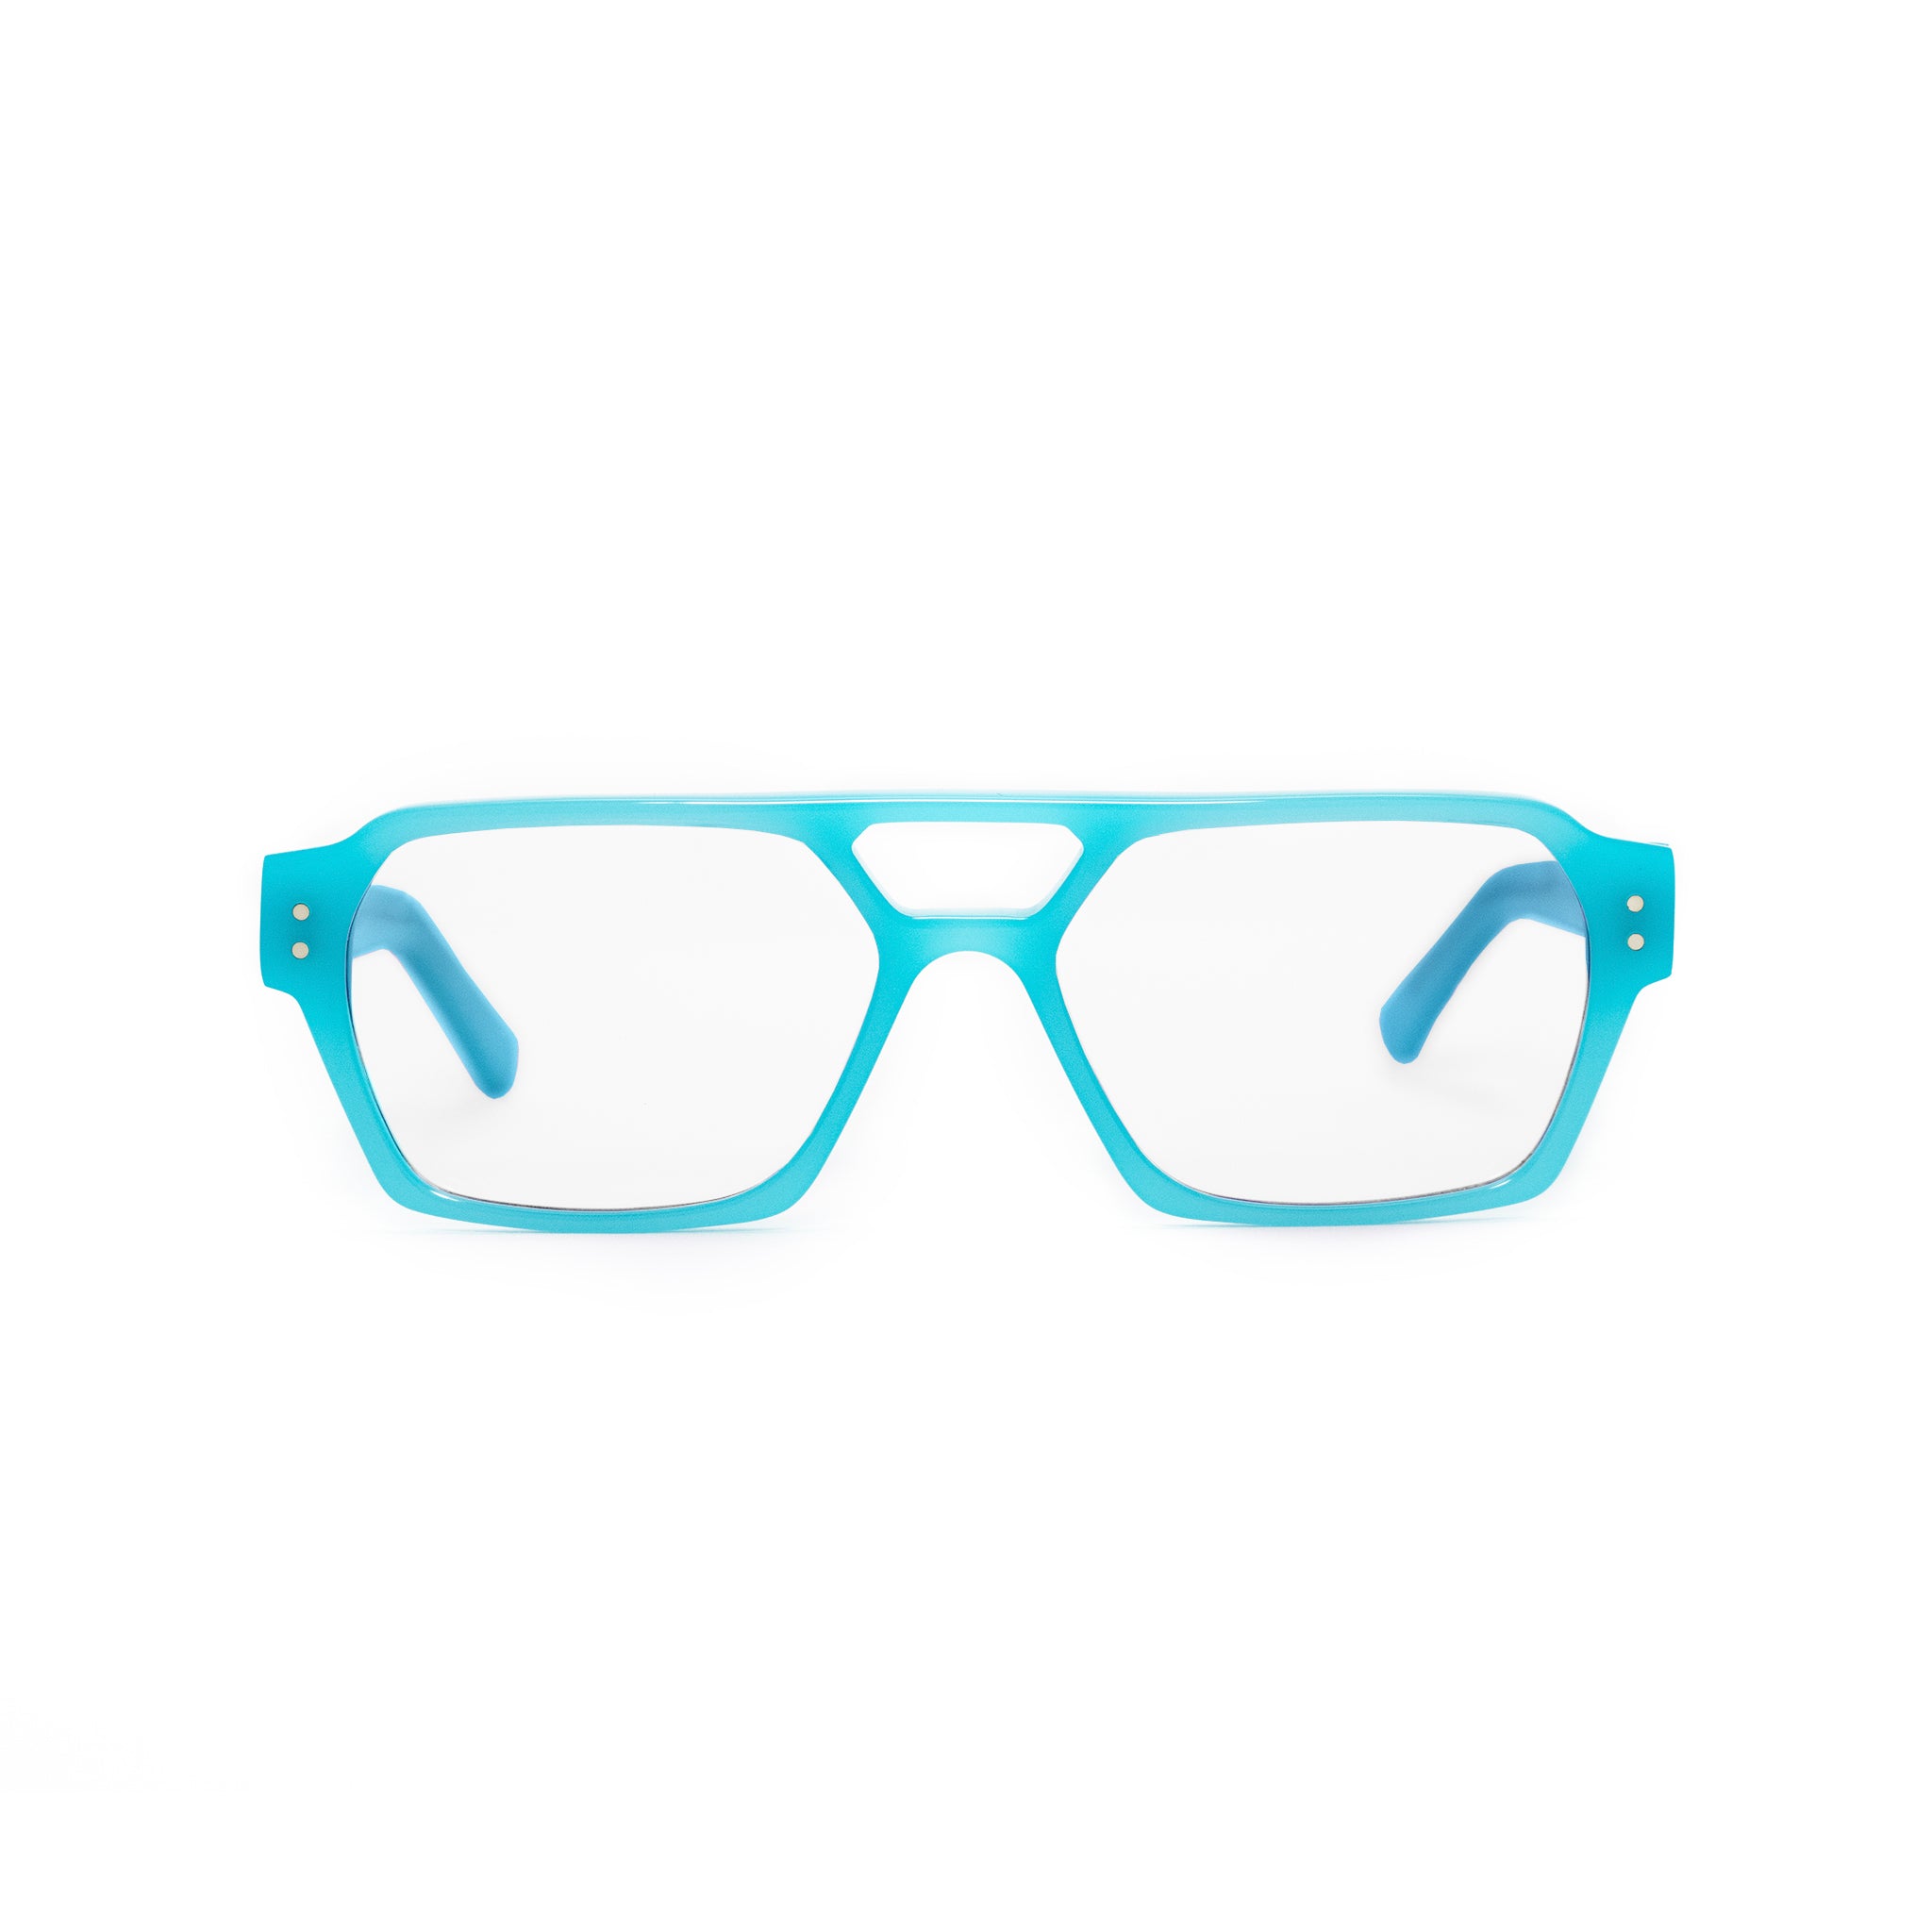 Ego optical glasses in opal blue from Ameos Eyewear.